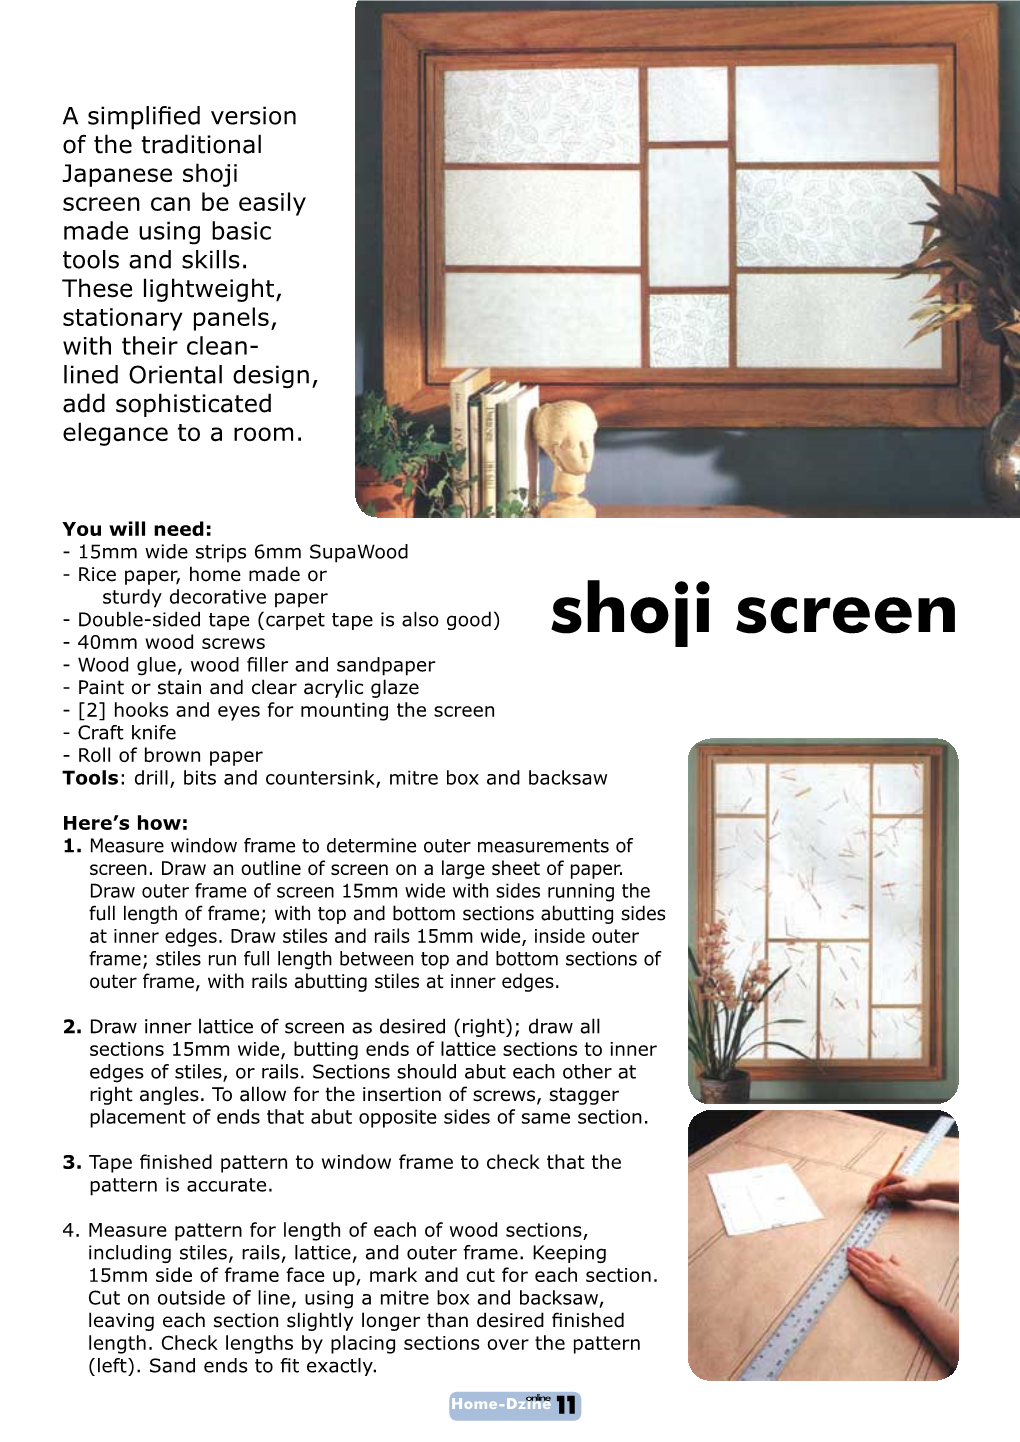 Shoji Screen Can Be Easily Made Using Basic Tools and Skills